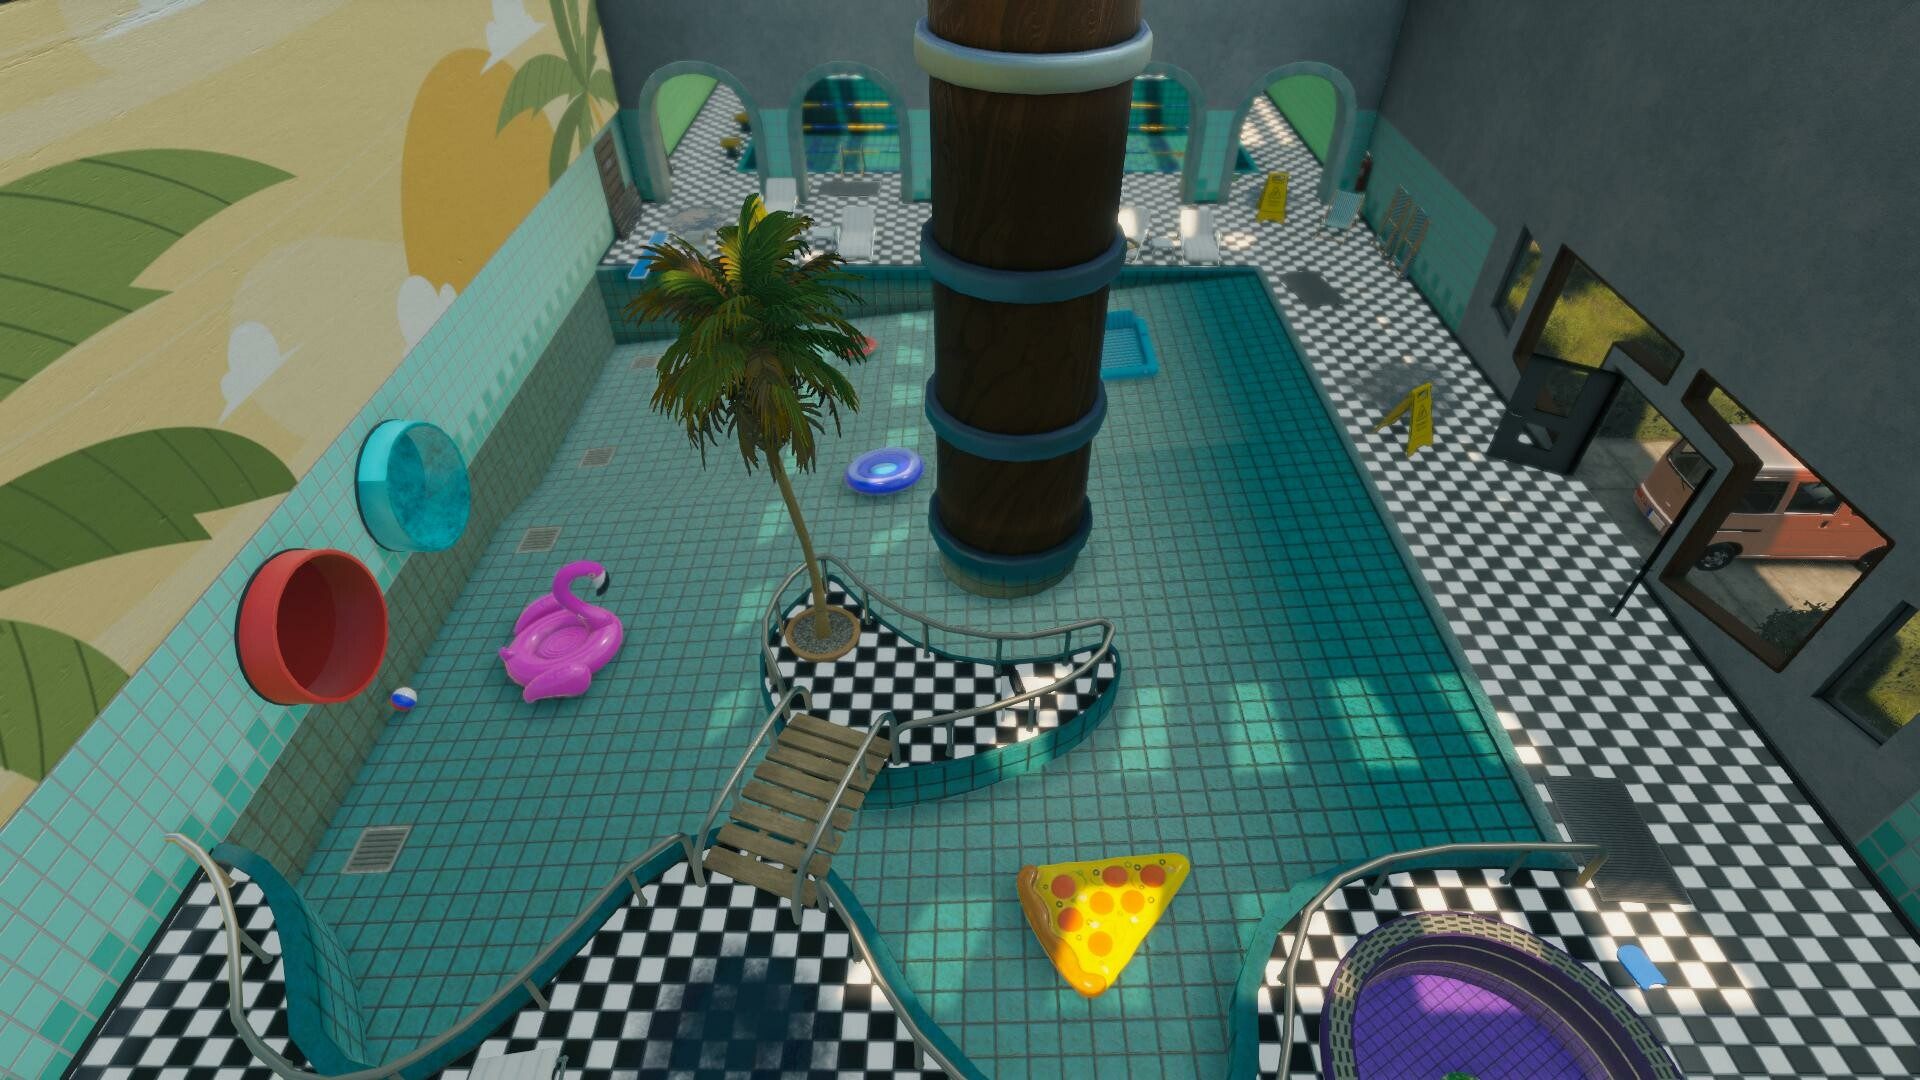 Pool Cleaning Simulator - скриншот игры 5